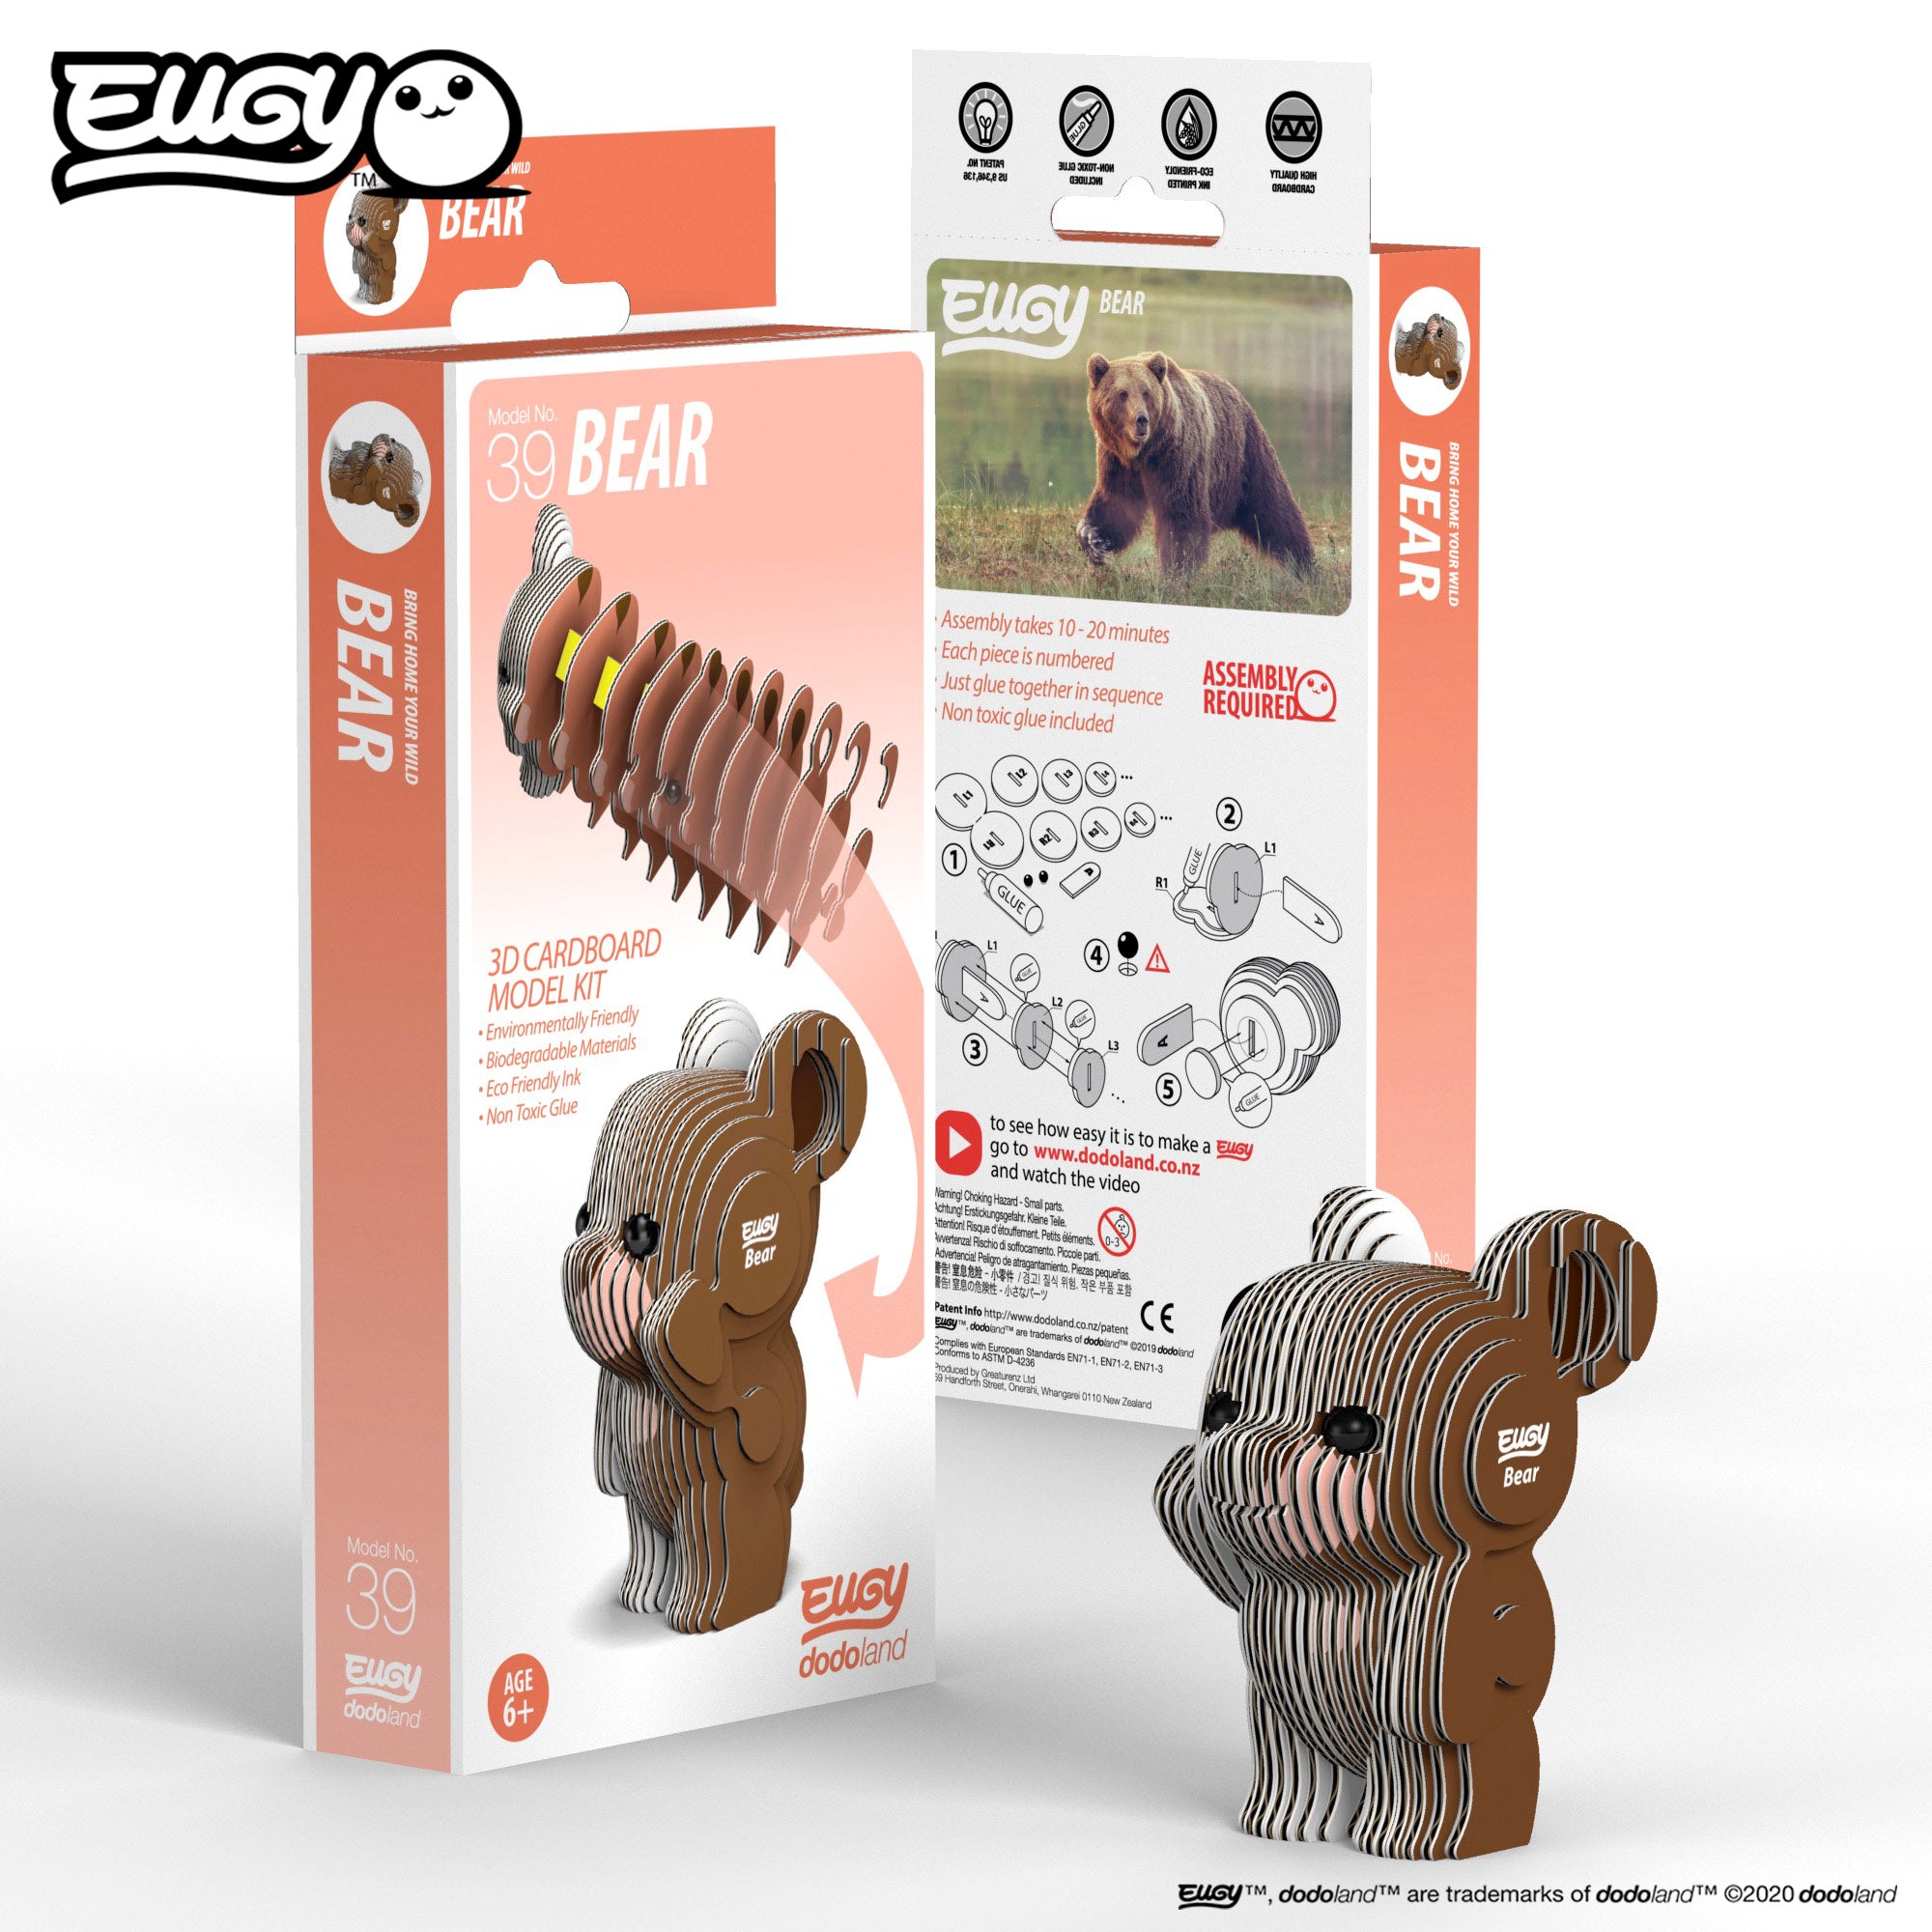 EUGY Bear - 3D Cardboard Model Kit